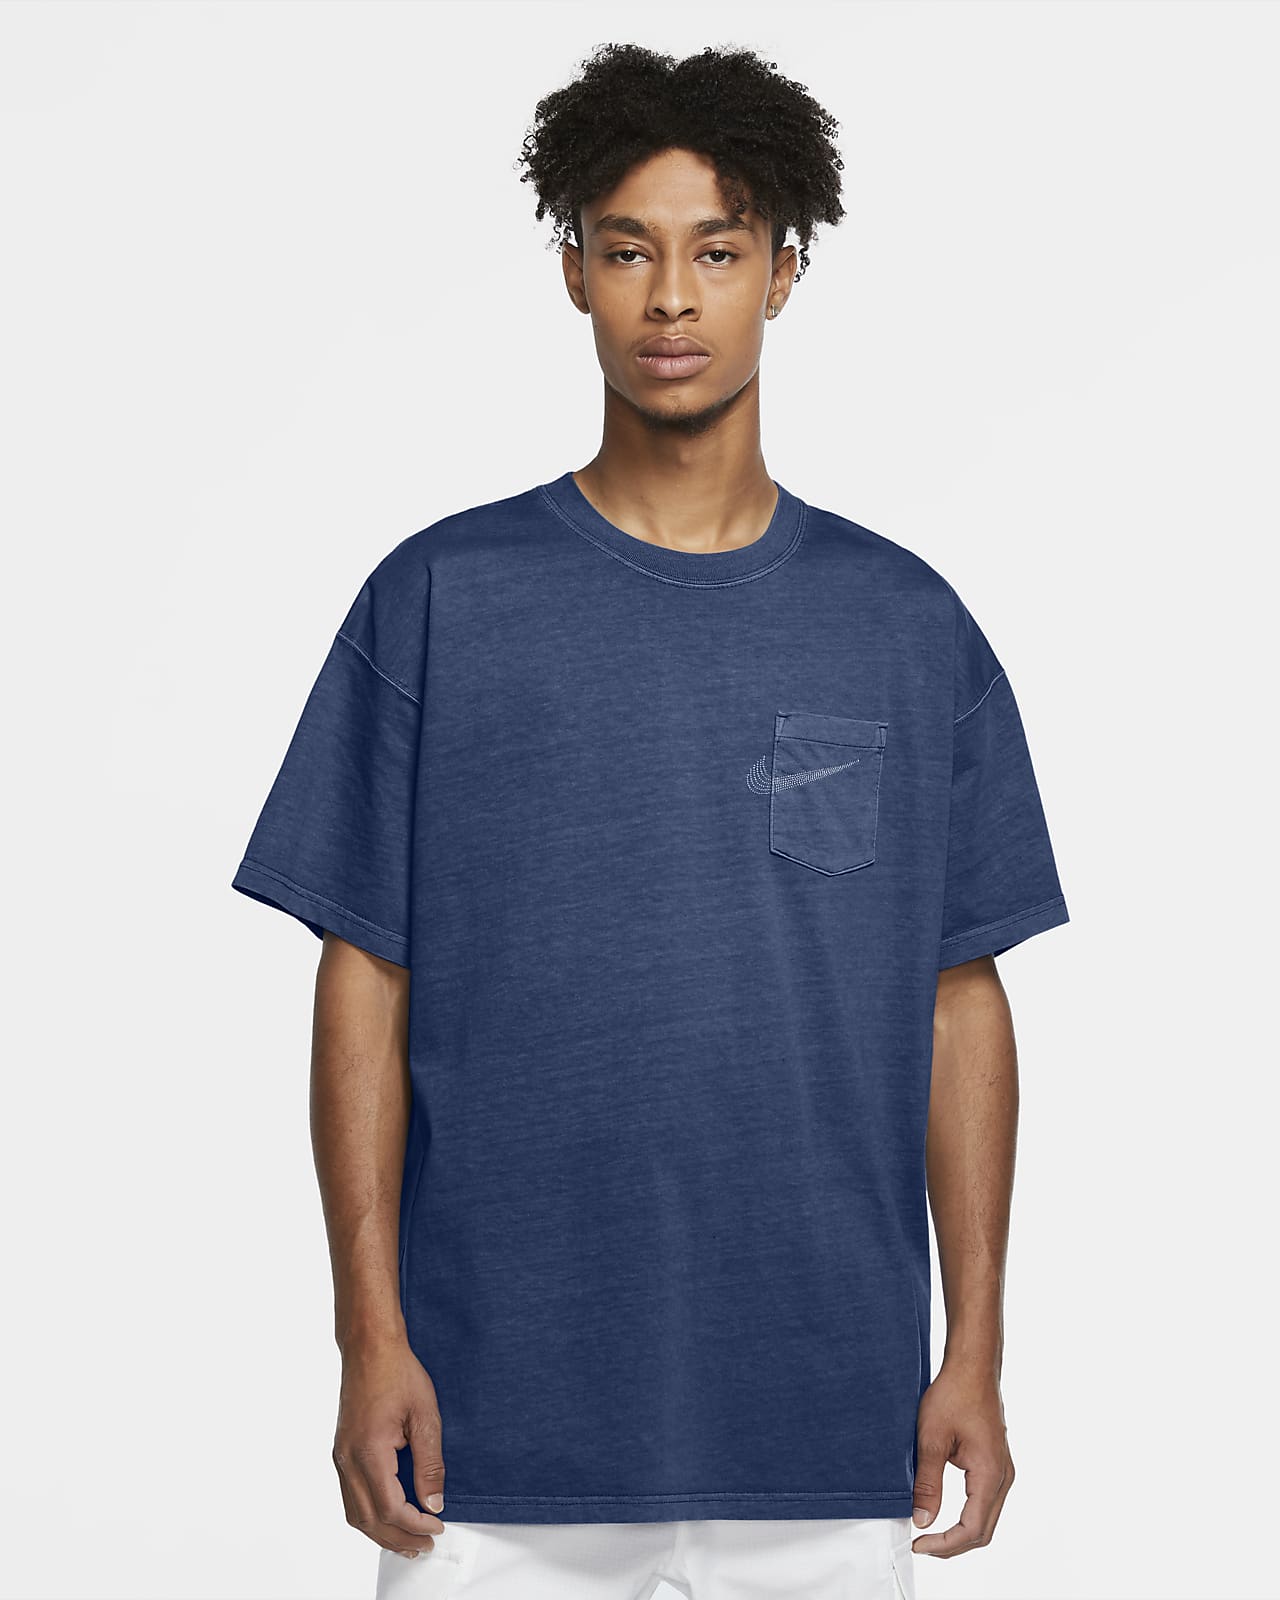 Nike SB Men's Pocket Skate T-Shirt